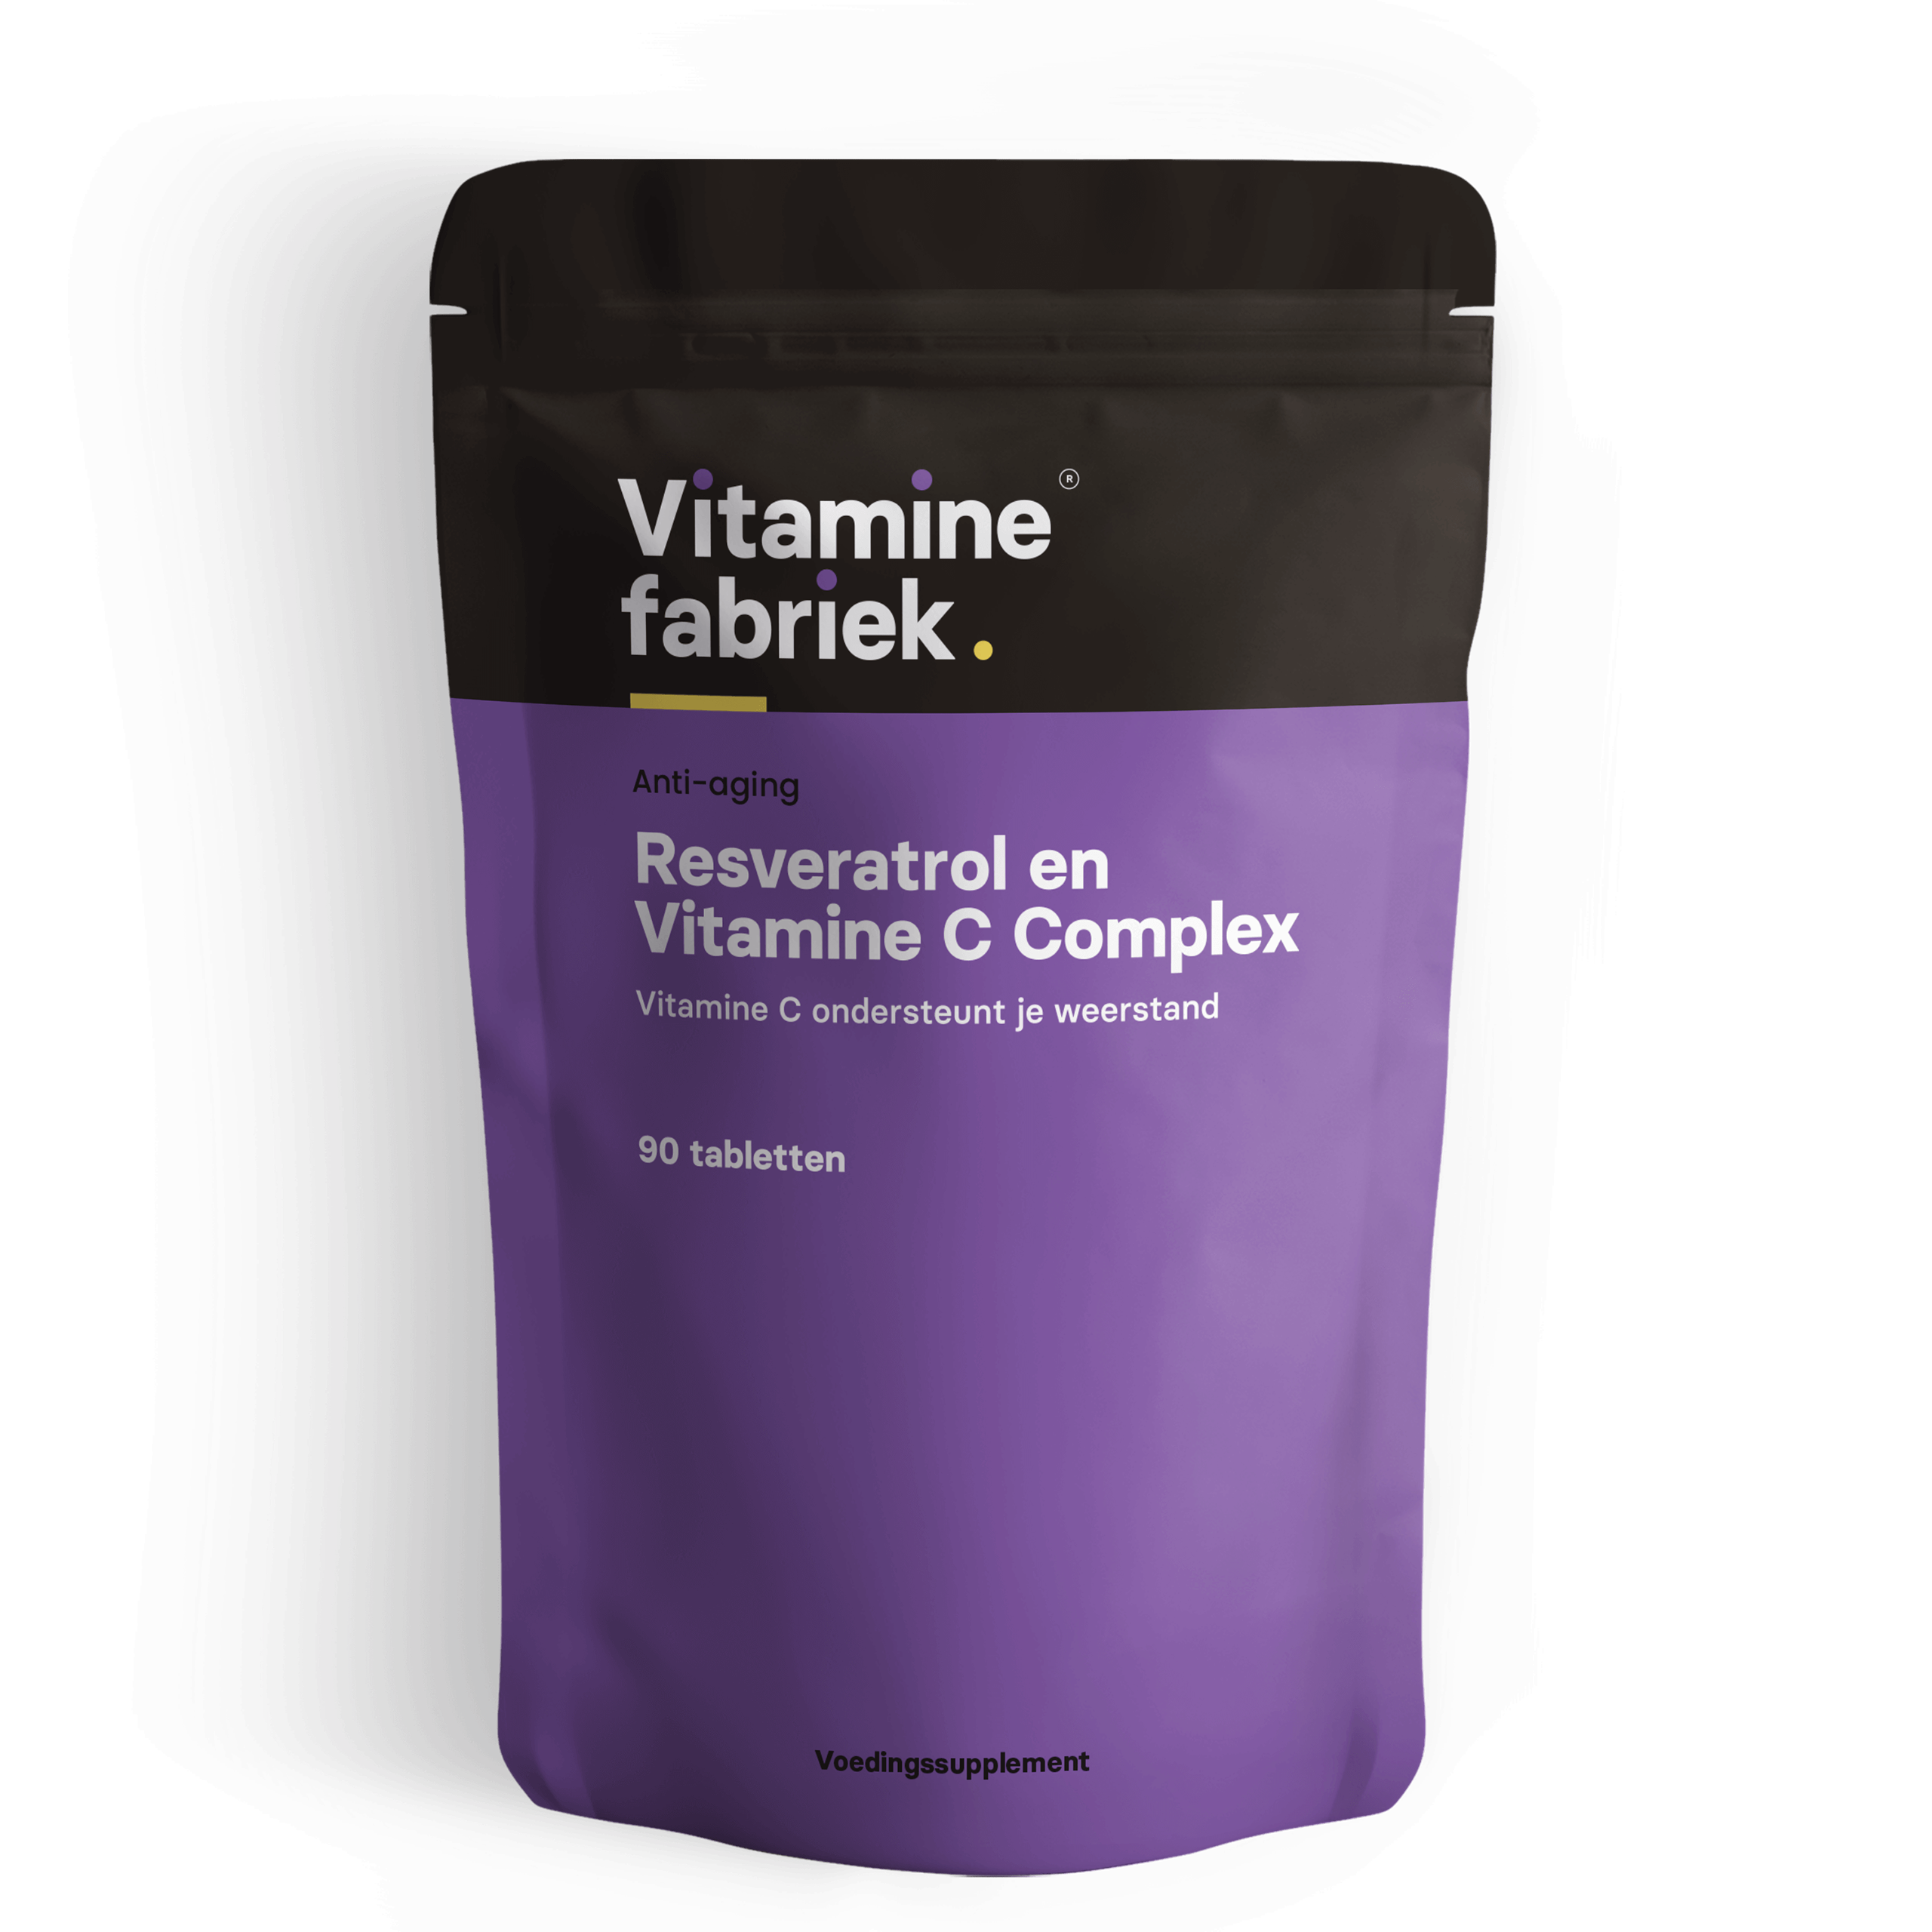 Resveratrol en Vitamine C Complex - 90 tabletten - Vitaminefabriek.nl